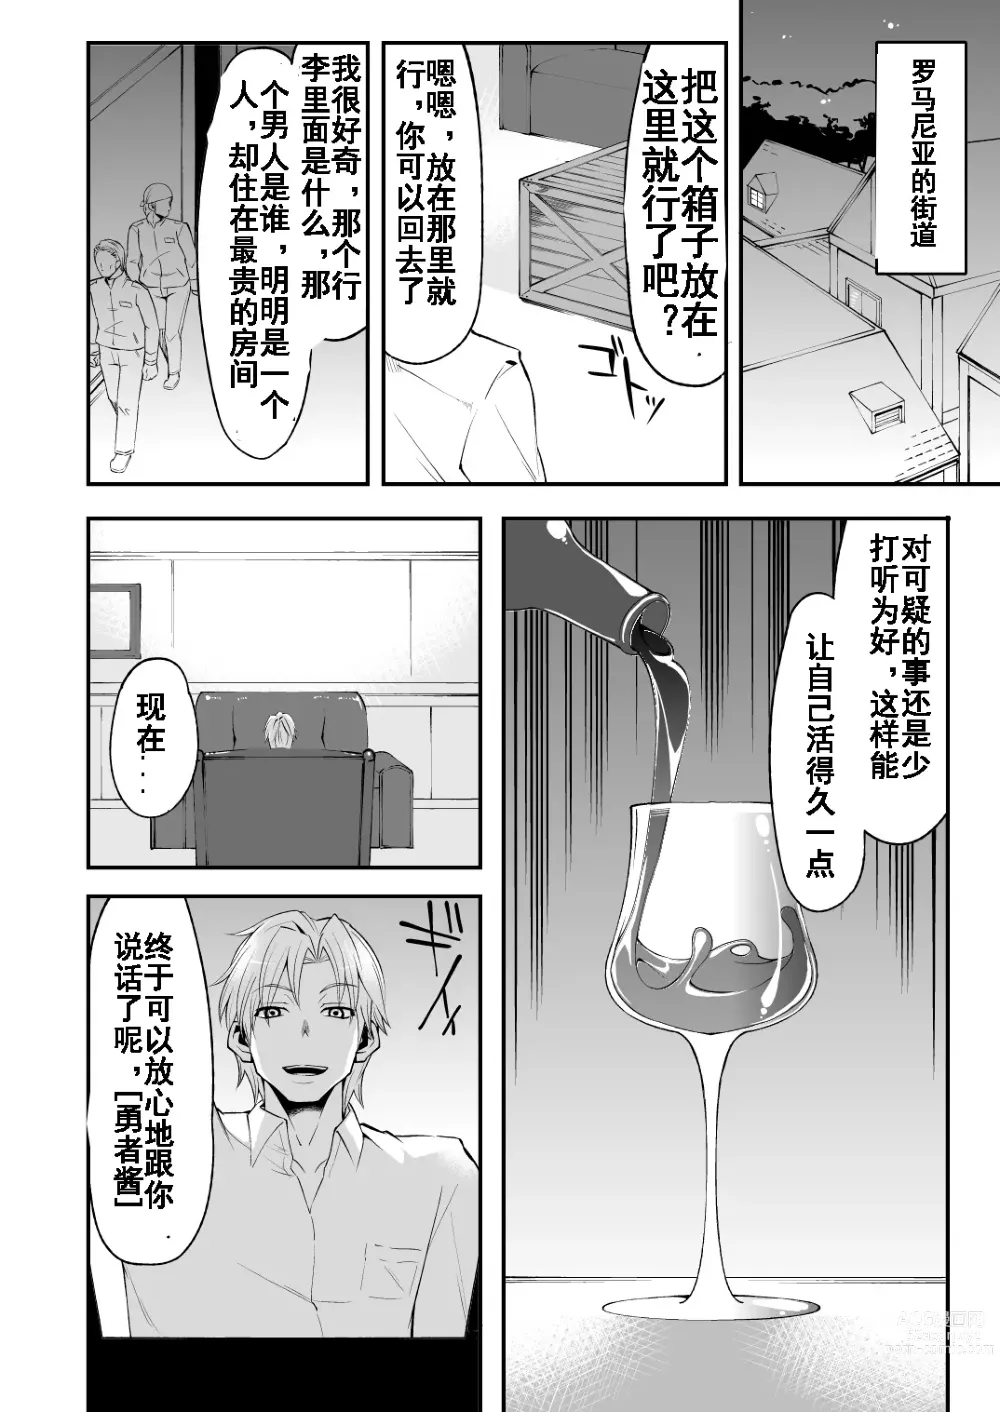 Page 3 of doujinshi Benmusu Bouken no Sho 4